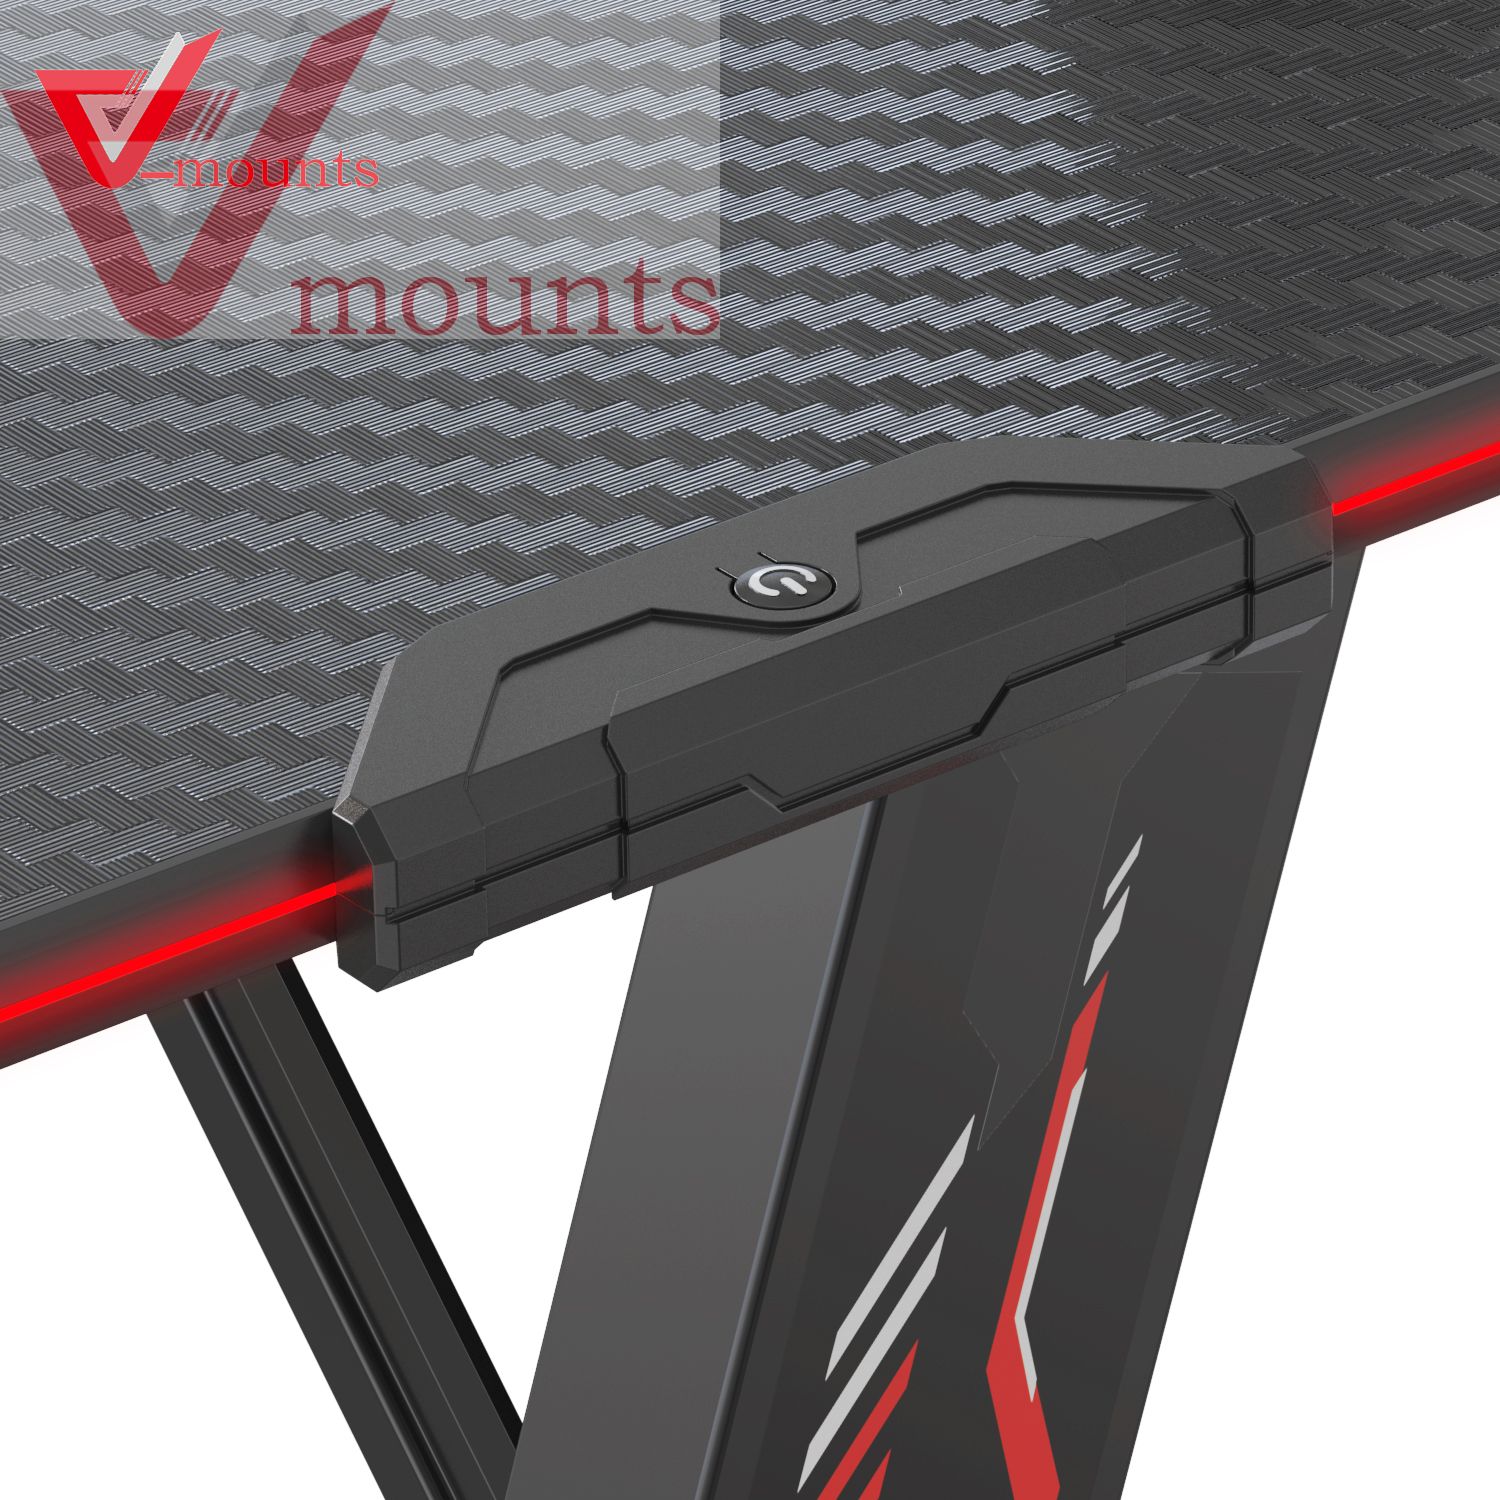 V-mounts ErgoTech Z Shaped RGB Computer Gaming Desk VM-GT01D